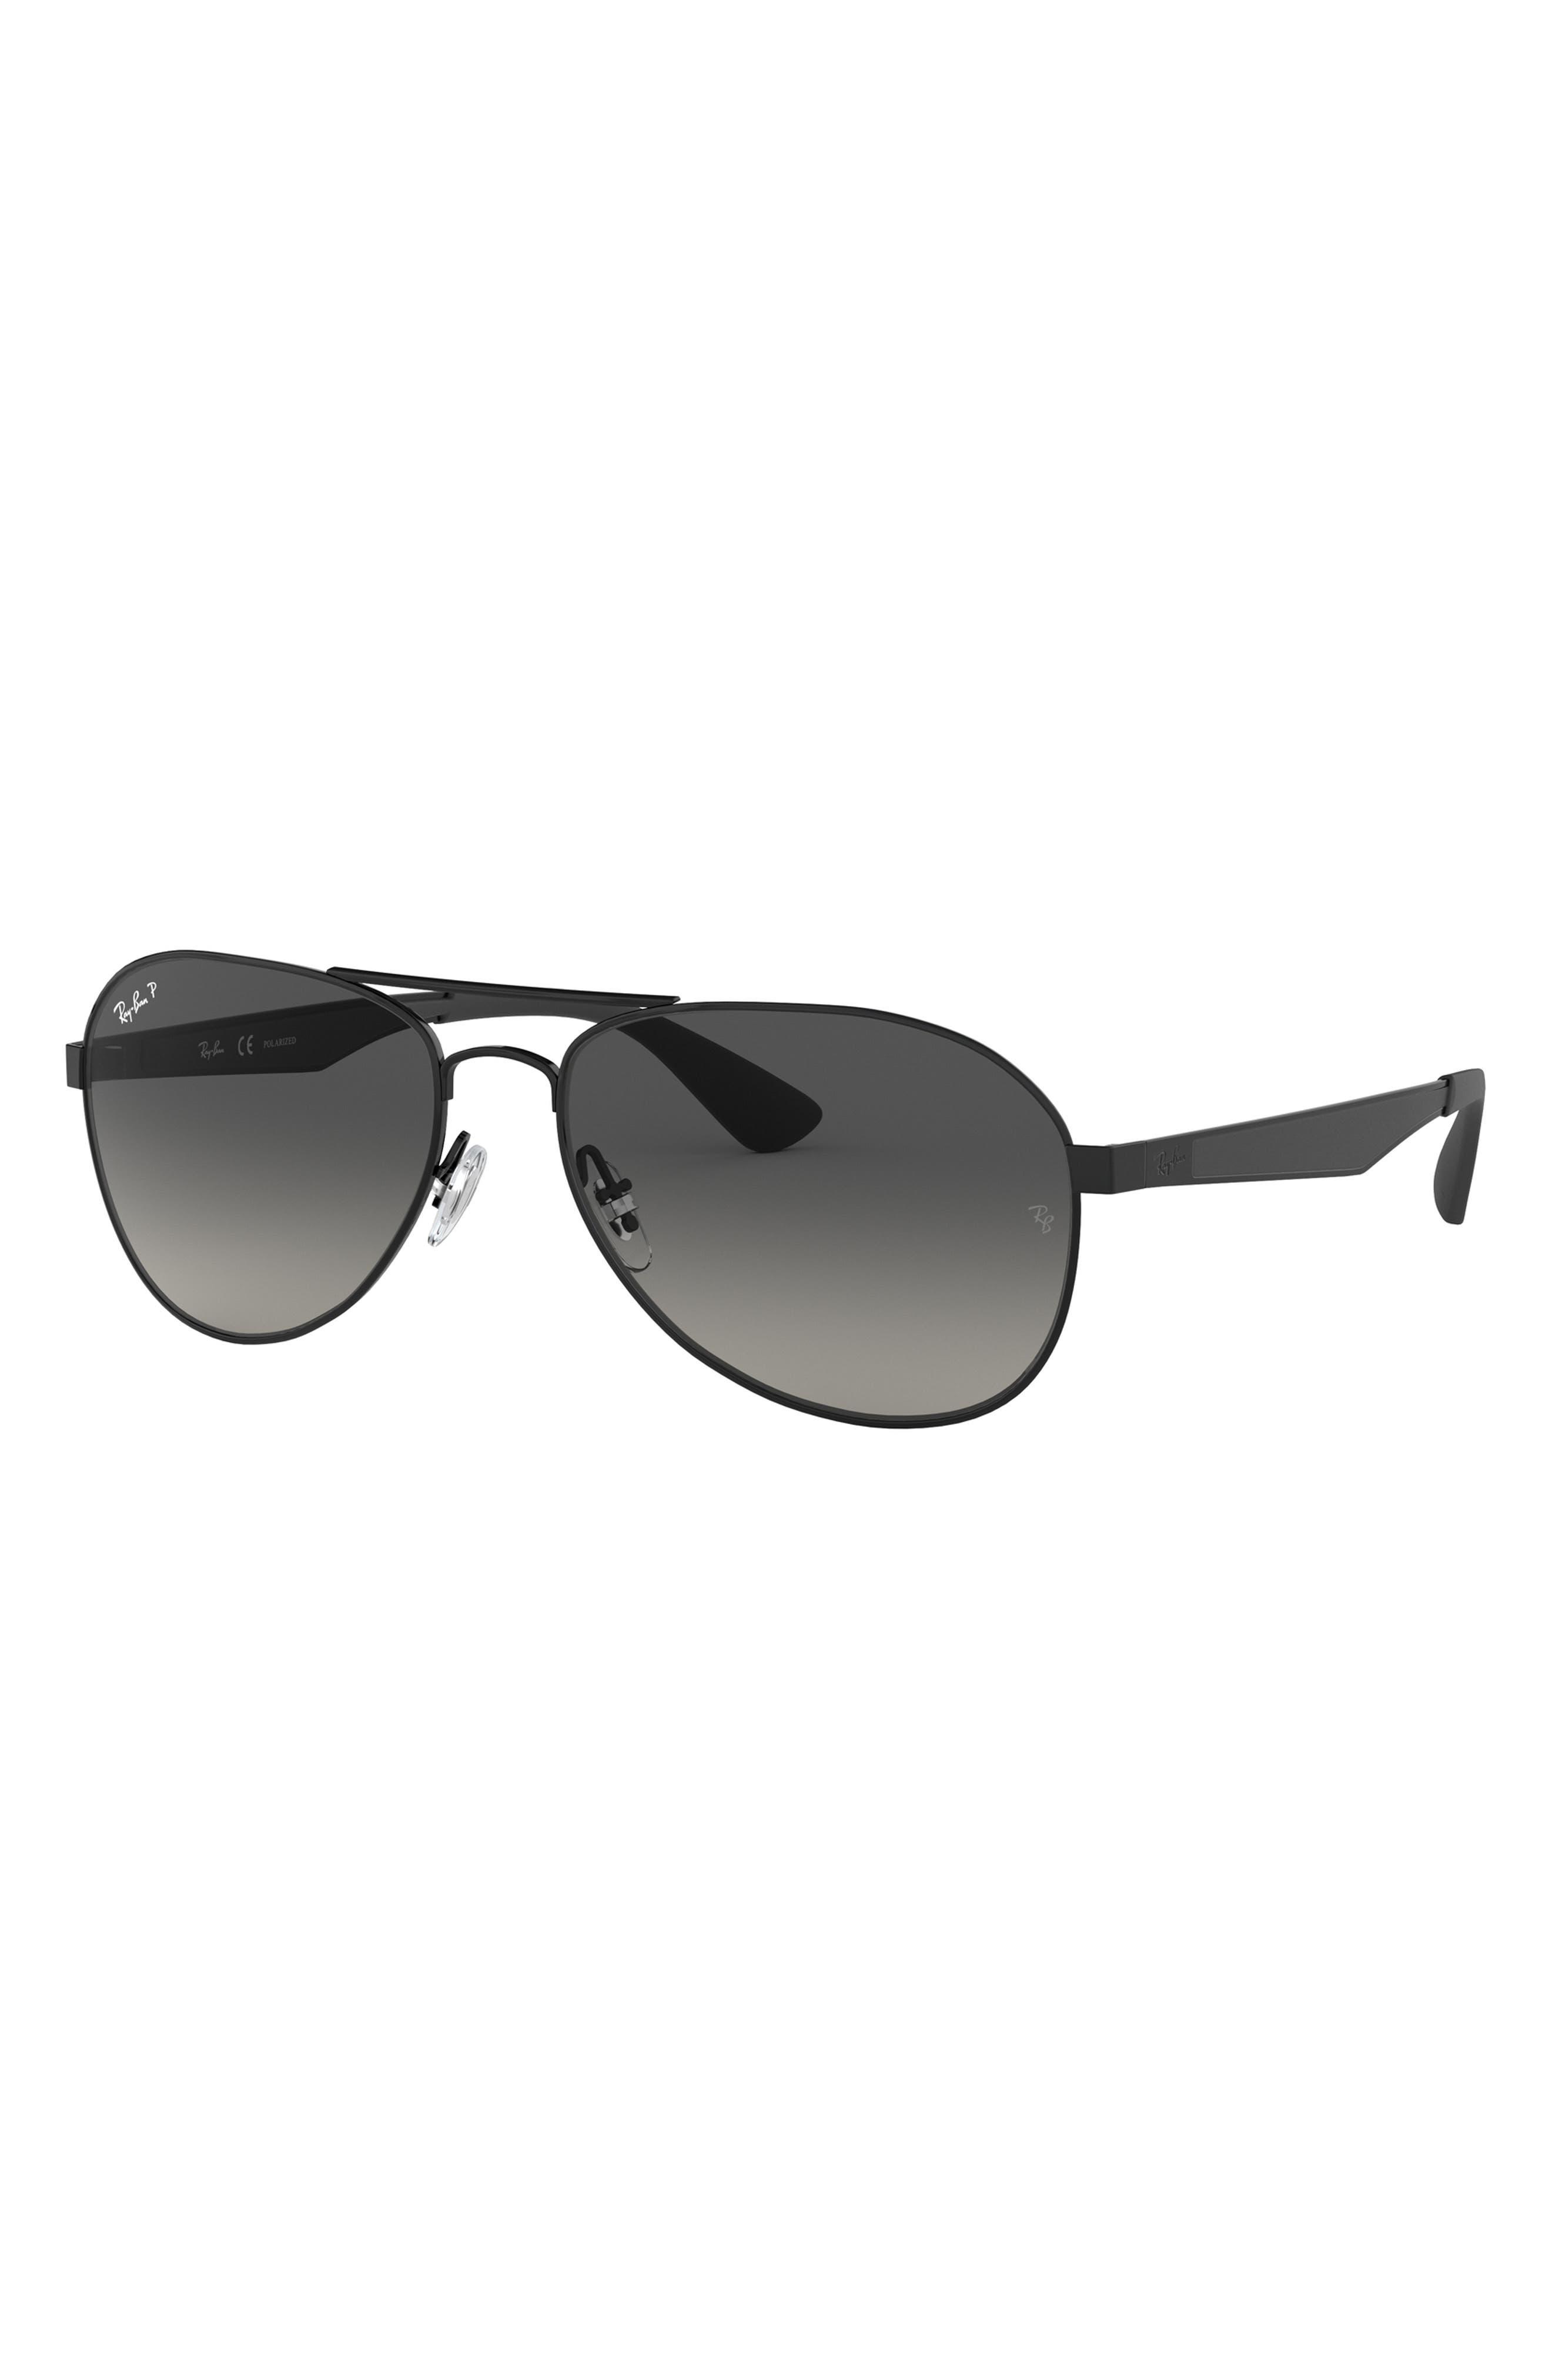 Ray-Ban Unisex 58mm Gradient Aviator Sunglasses in Black